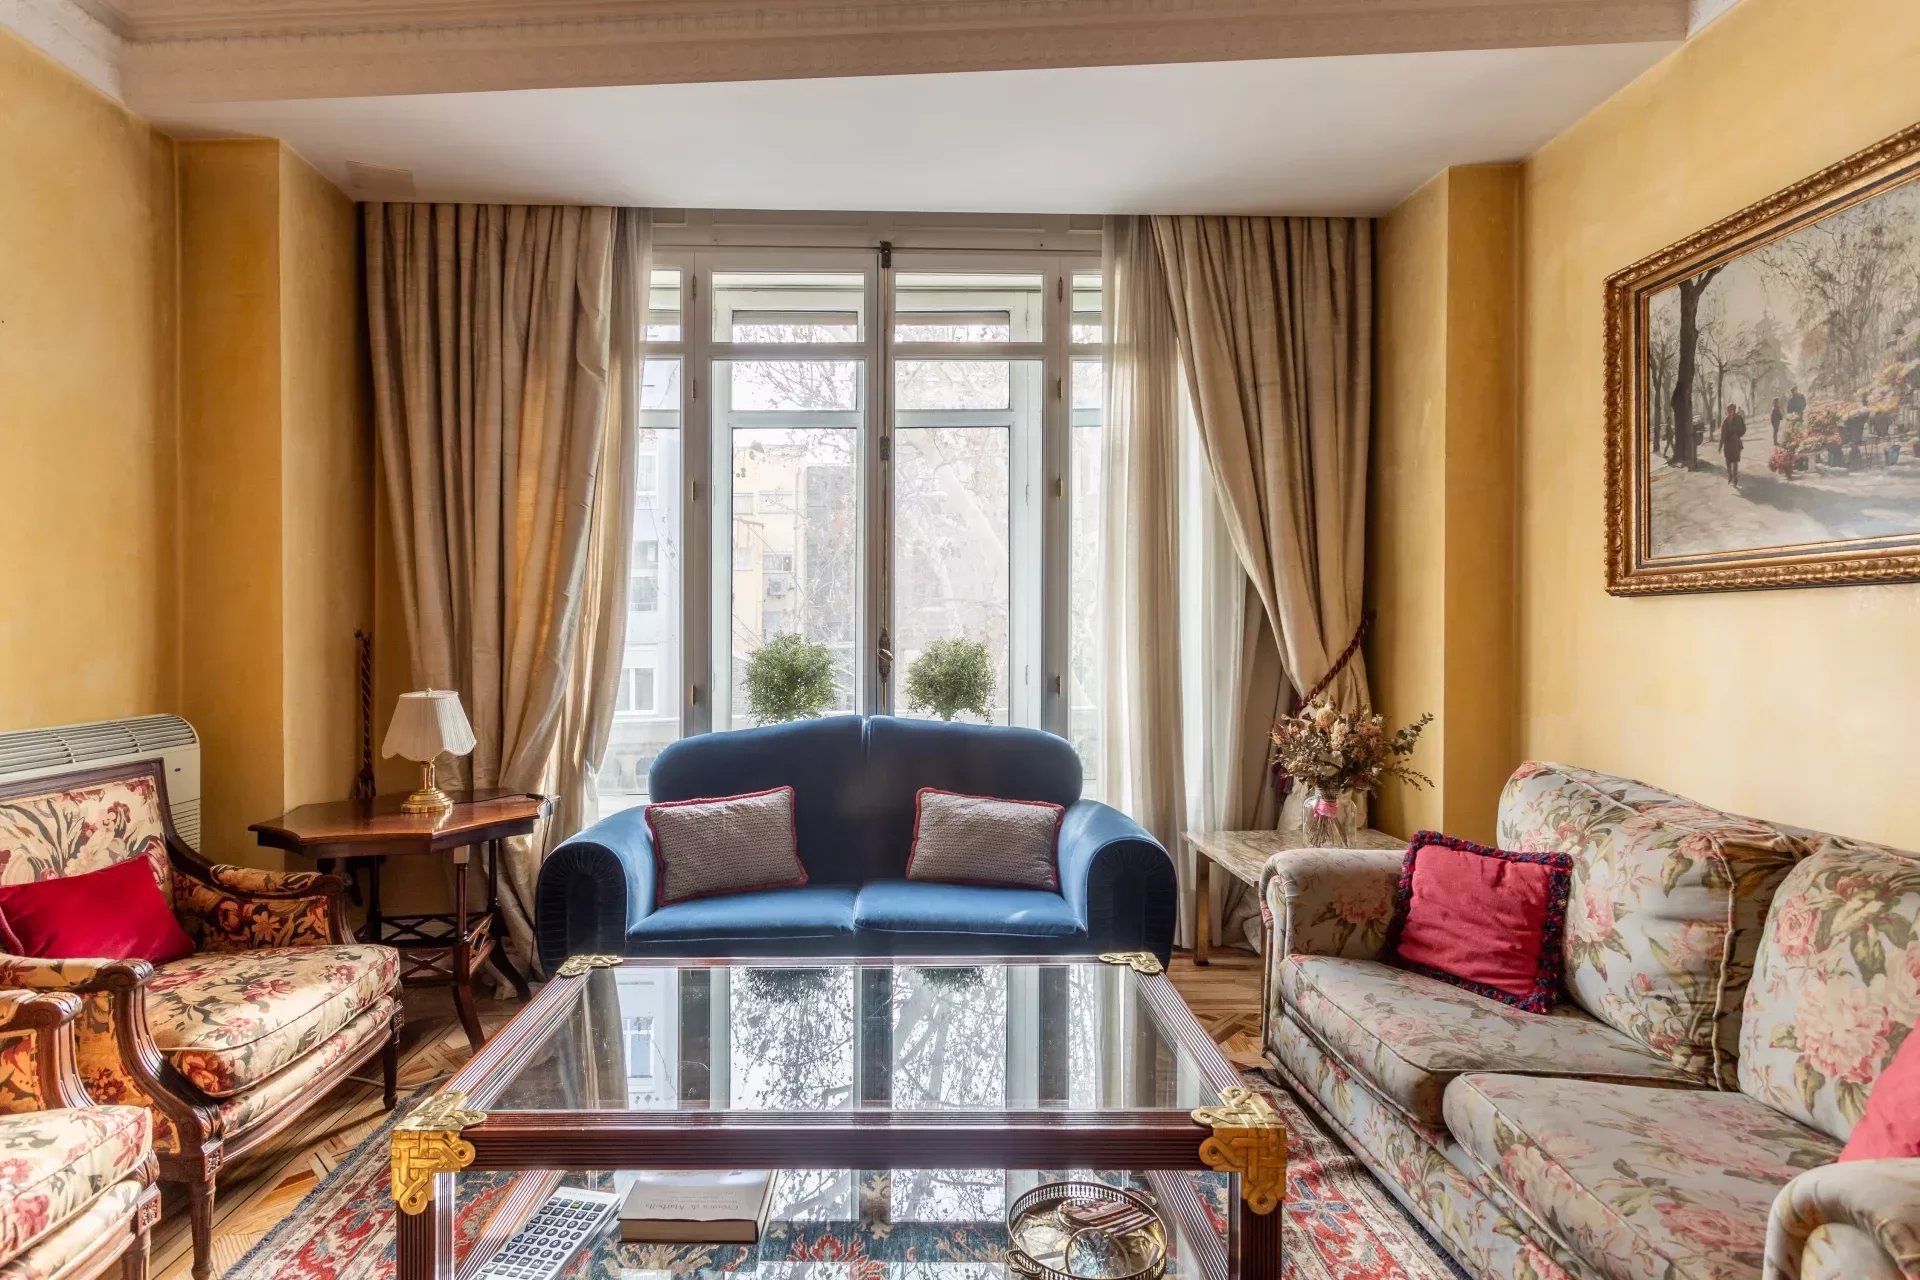 Exclusive apartment in the prestigious area of Almagro, Madrid - picture 7 title=